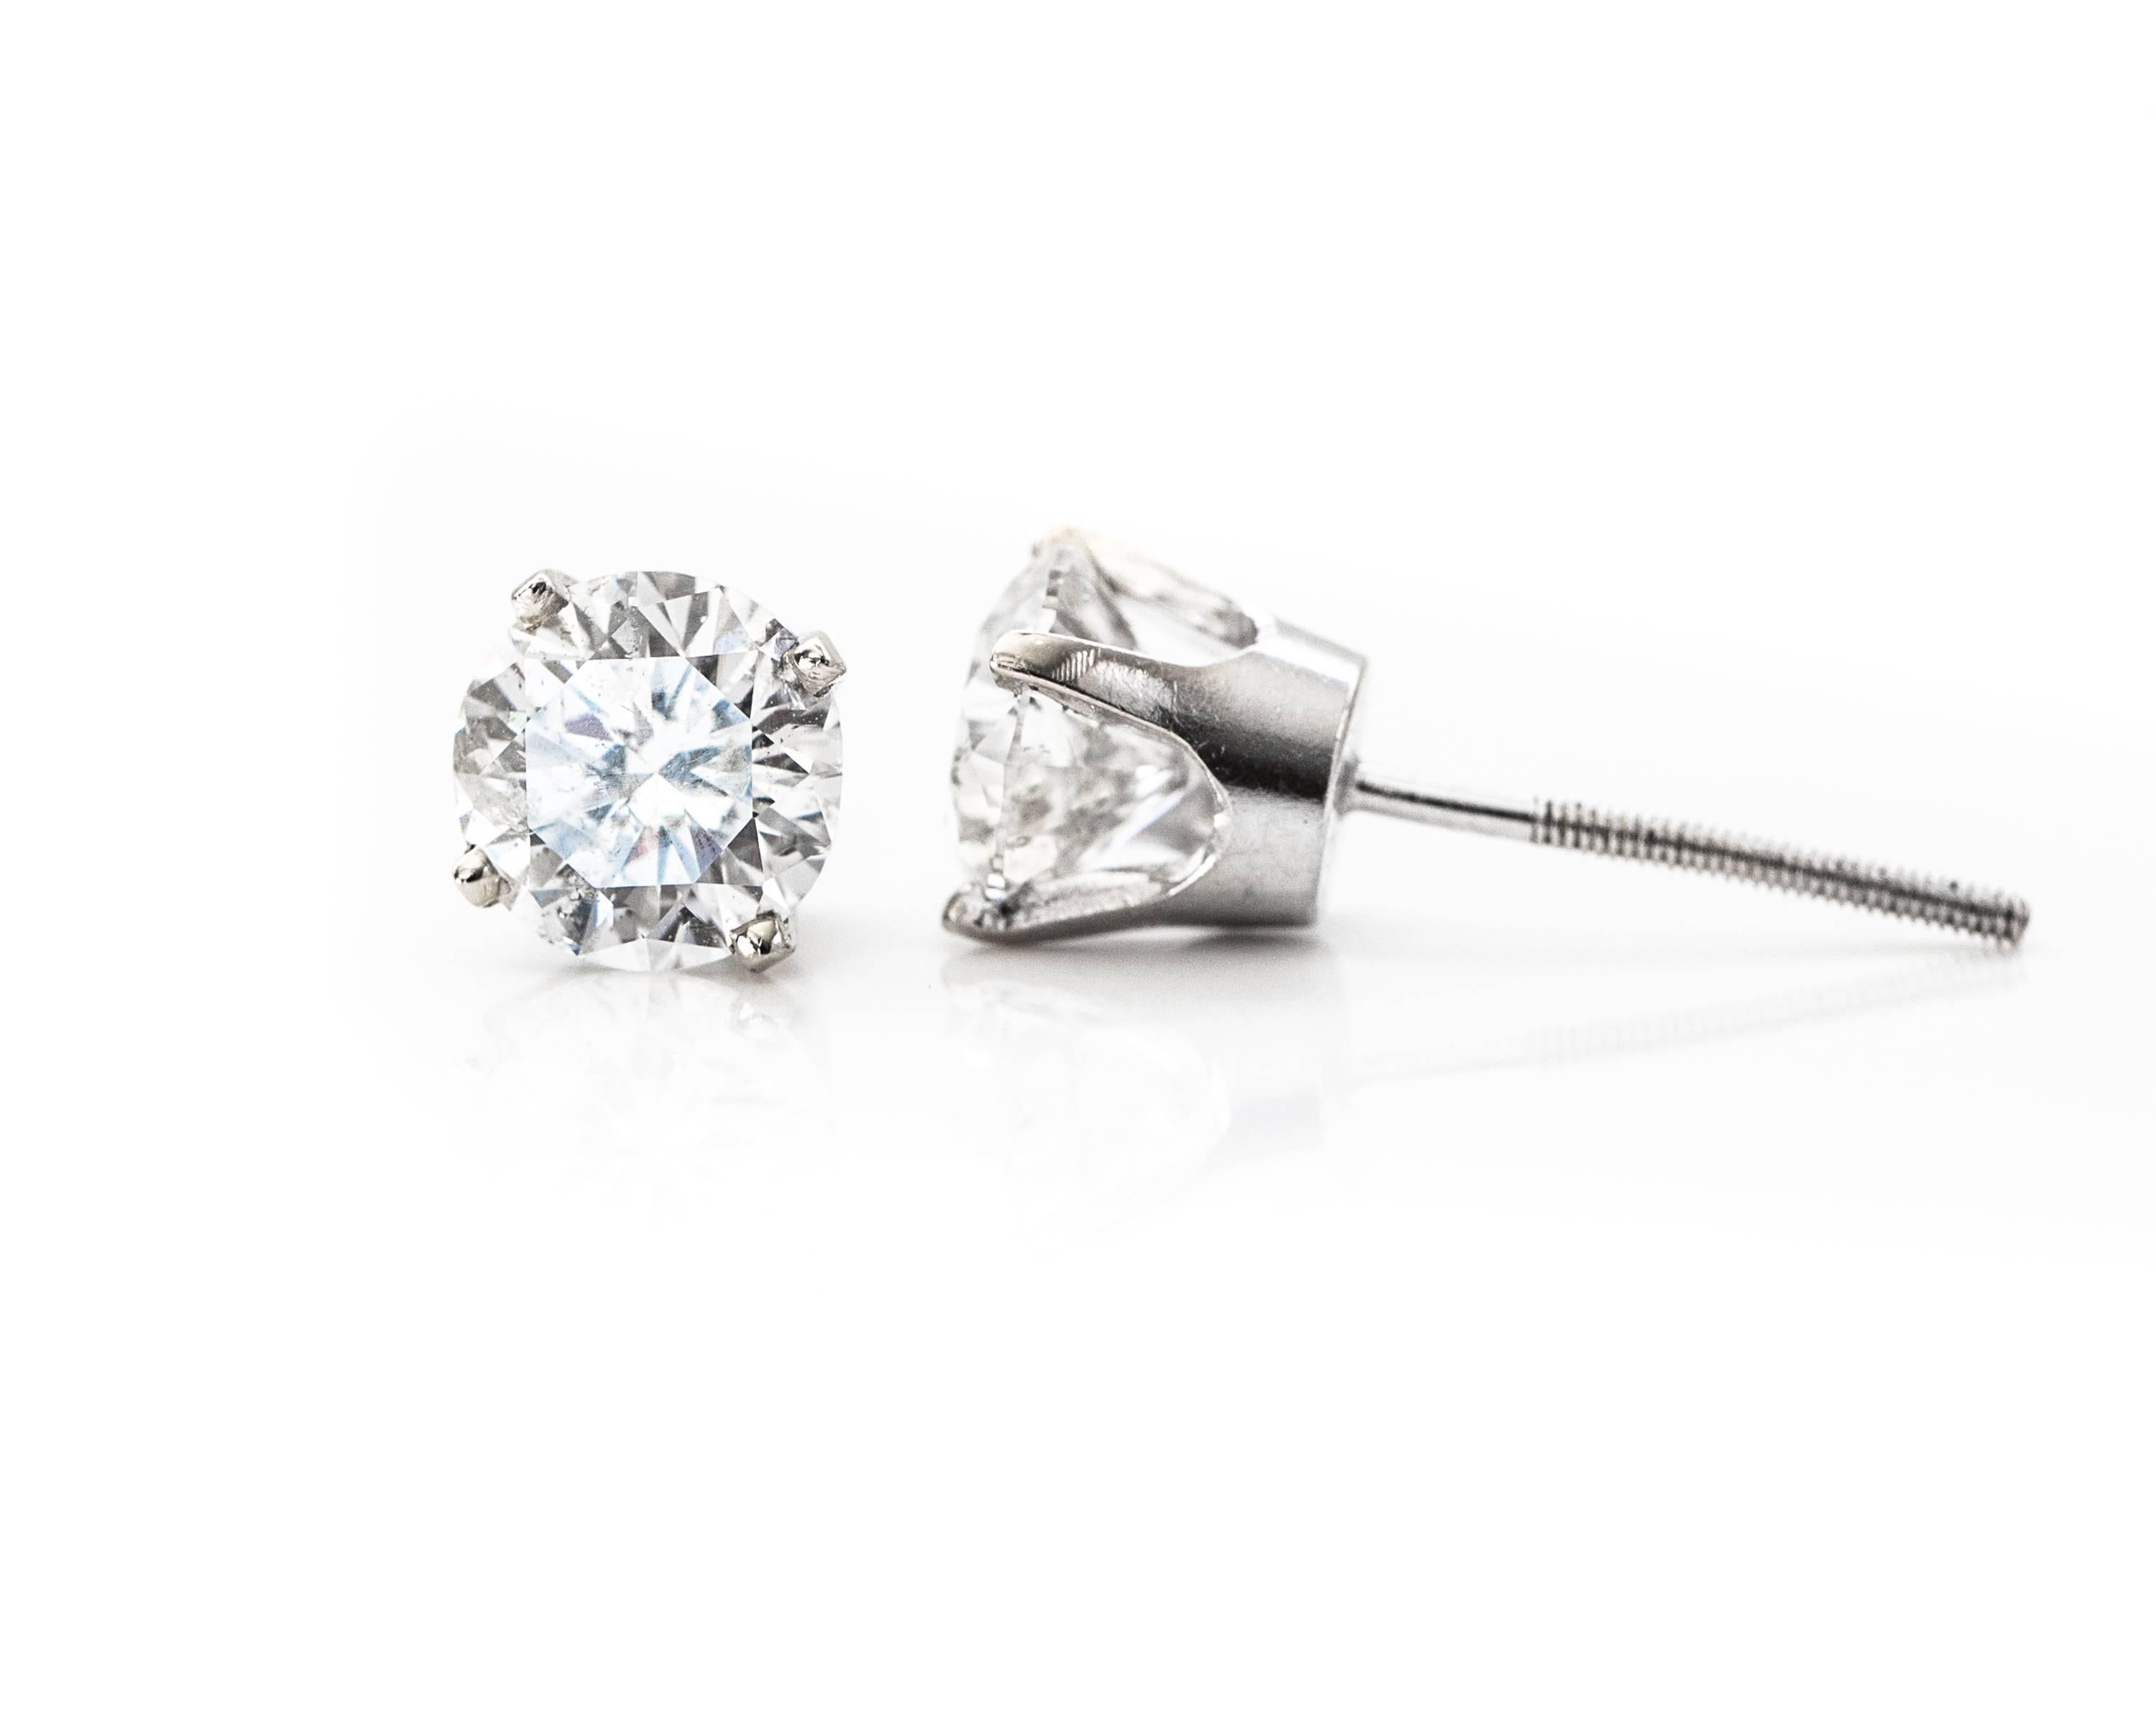 1.5 carat total weight diamond earrings